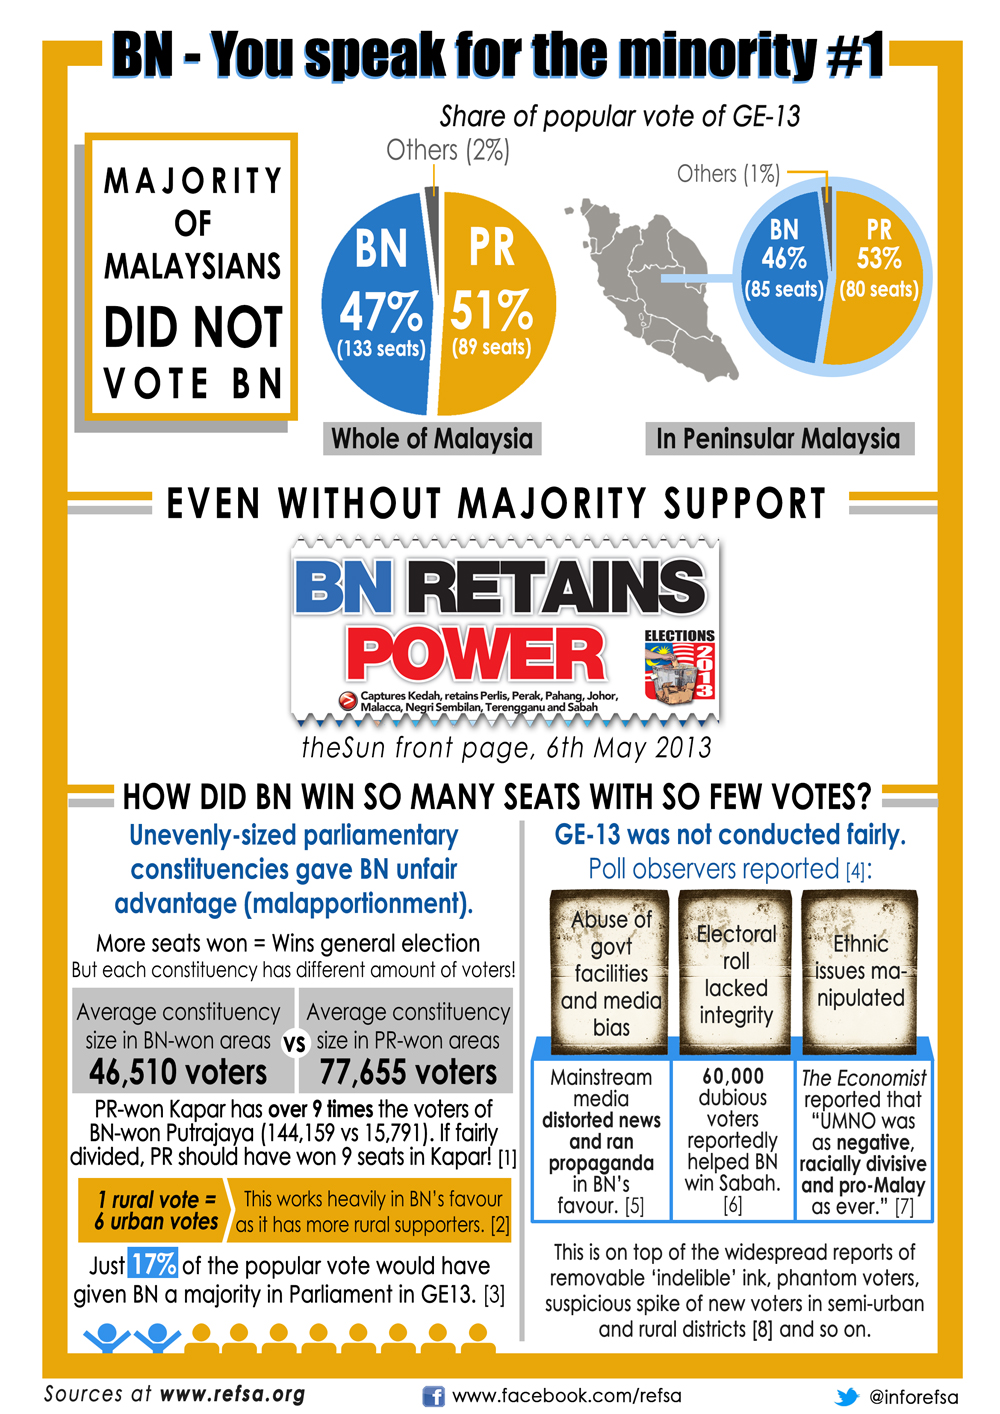 BN-speaks-for-minority-infographic---final-3